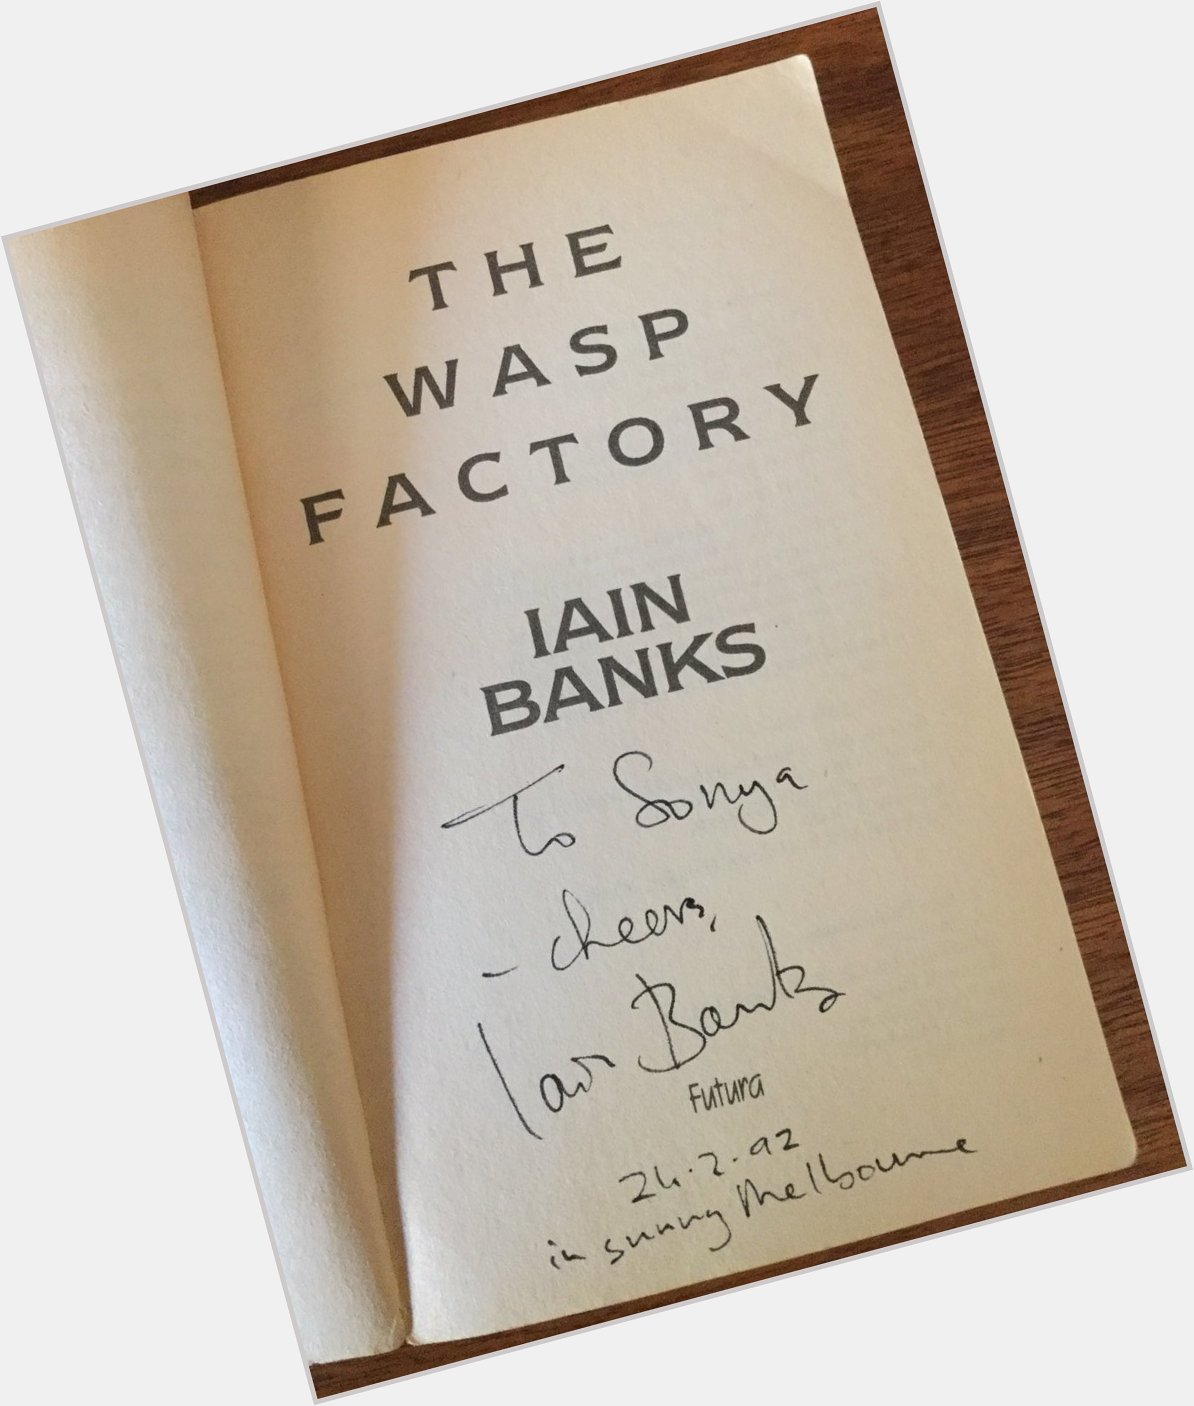 Happy birthday Iain Banks, wherever you are. X 